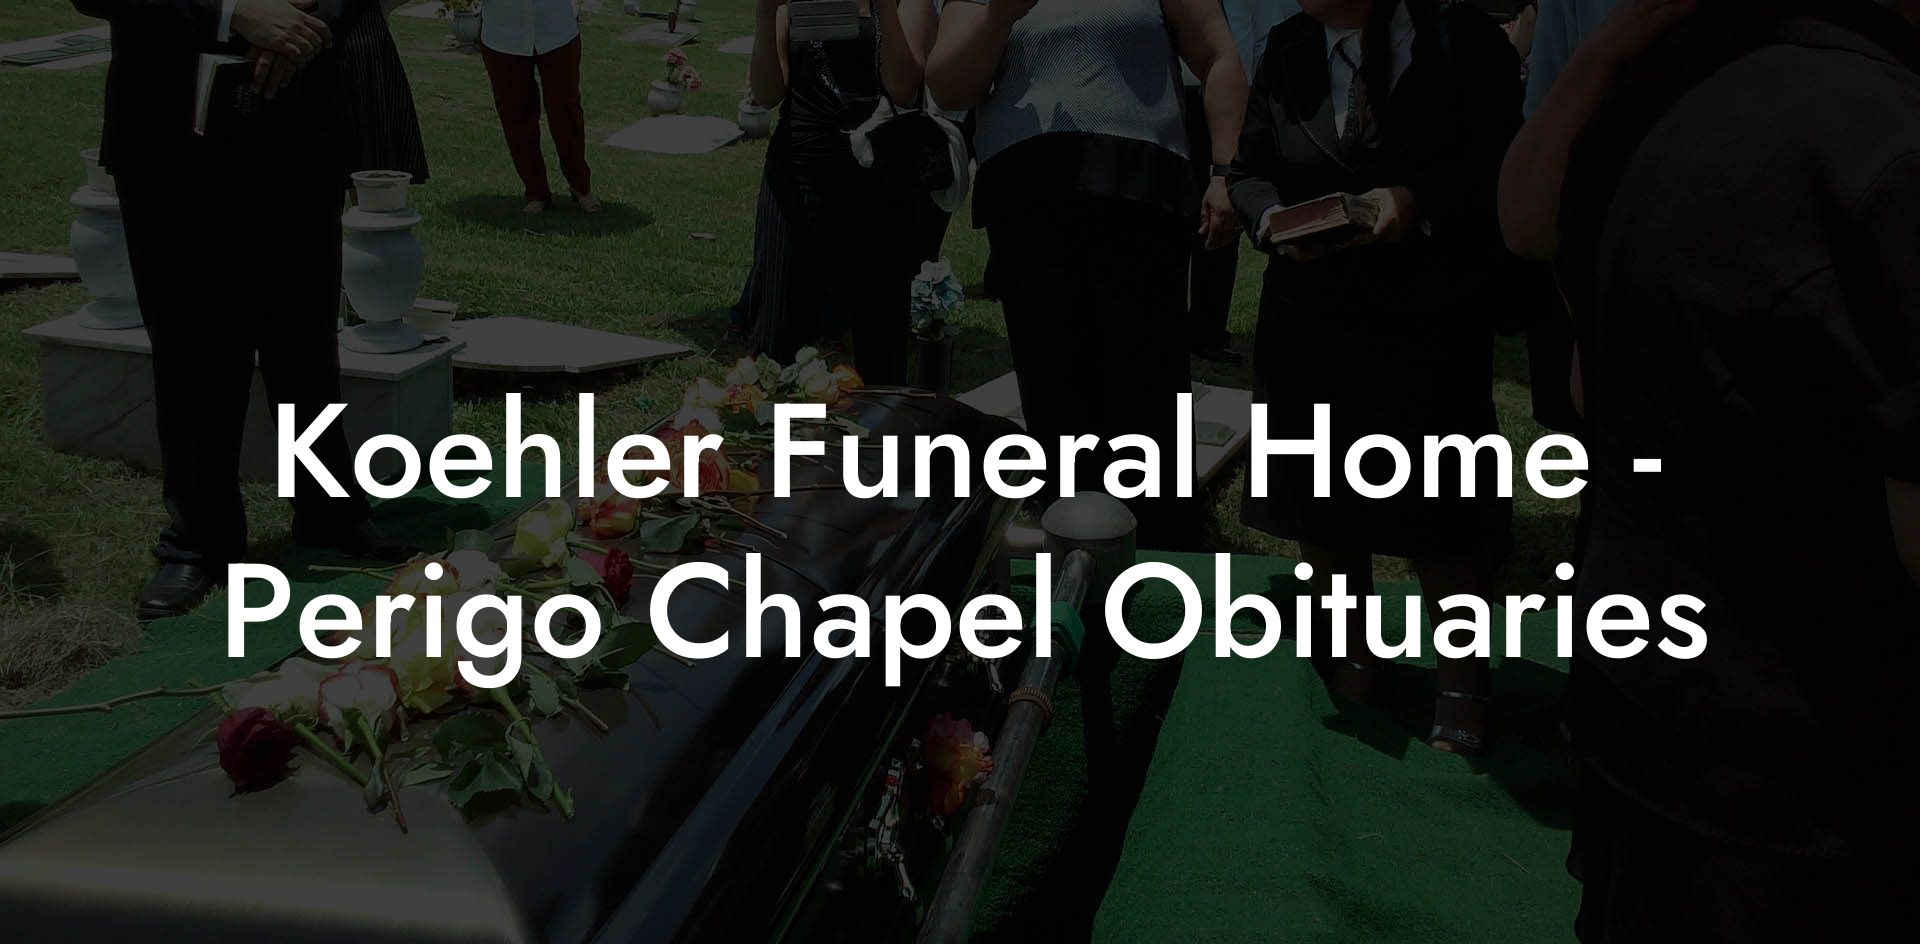 Koehler Funeral Home - Perigo Chapel Obituaries